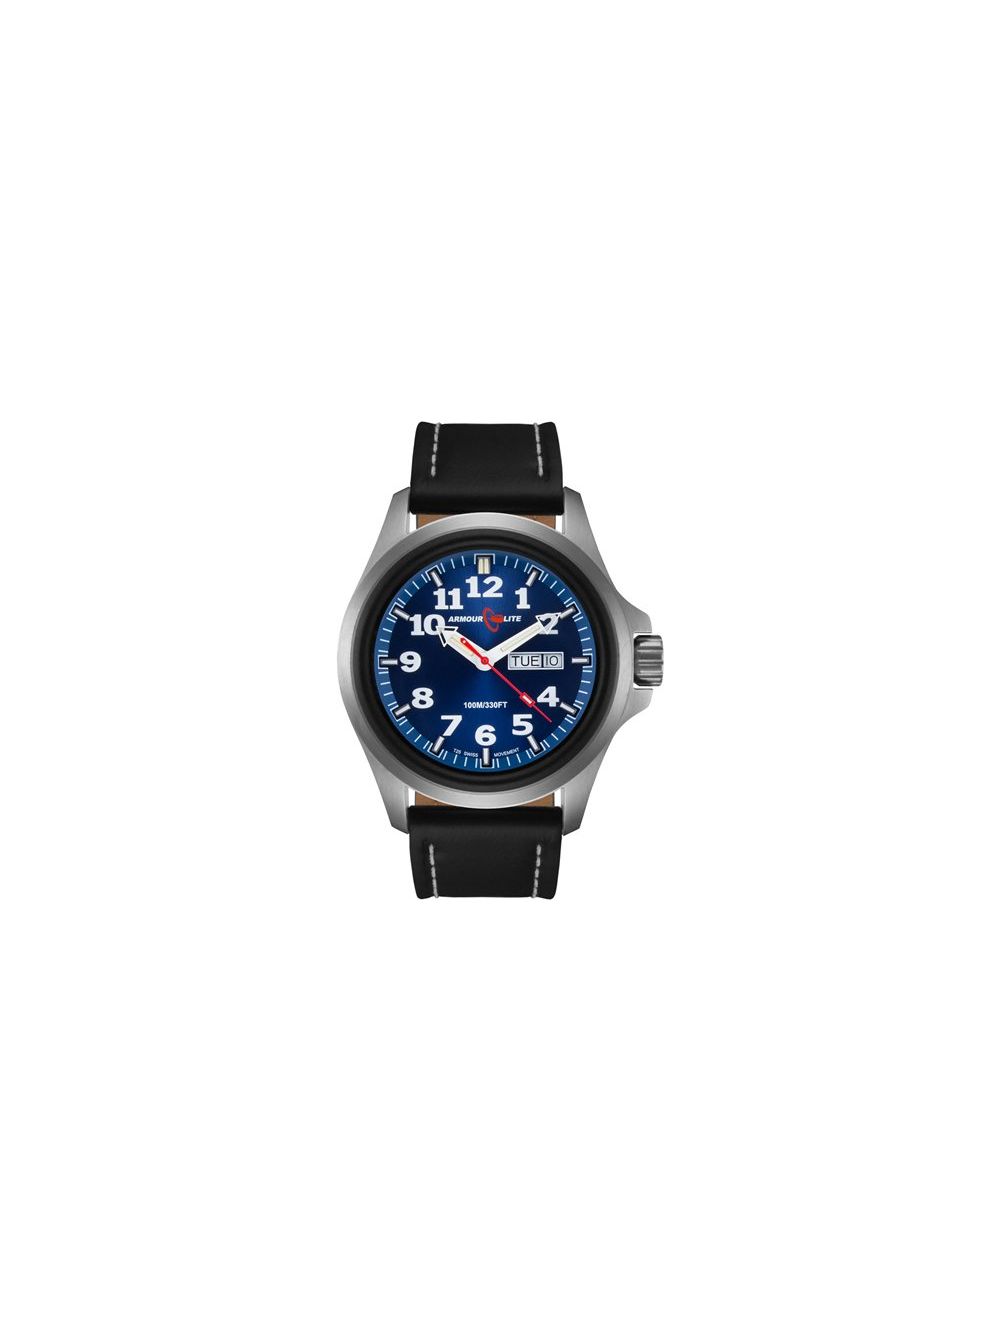 ArmourLite Officer Tritium Illuminated Watch - Blue, Black Leather